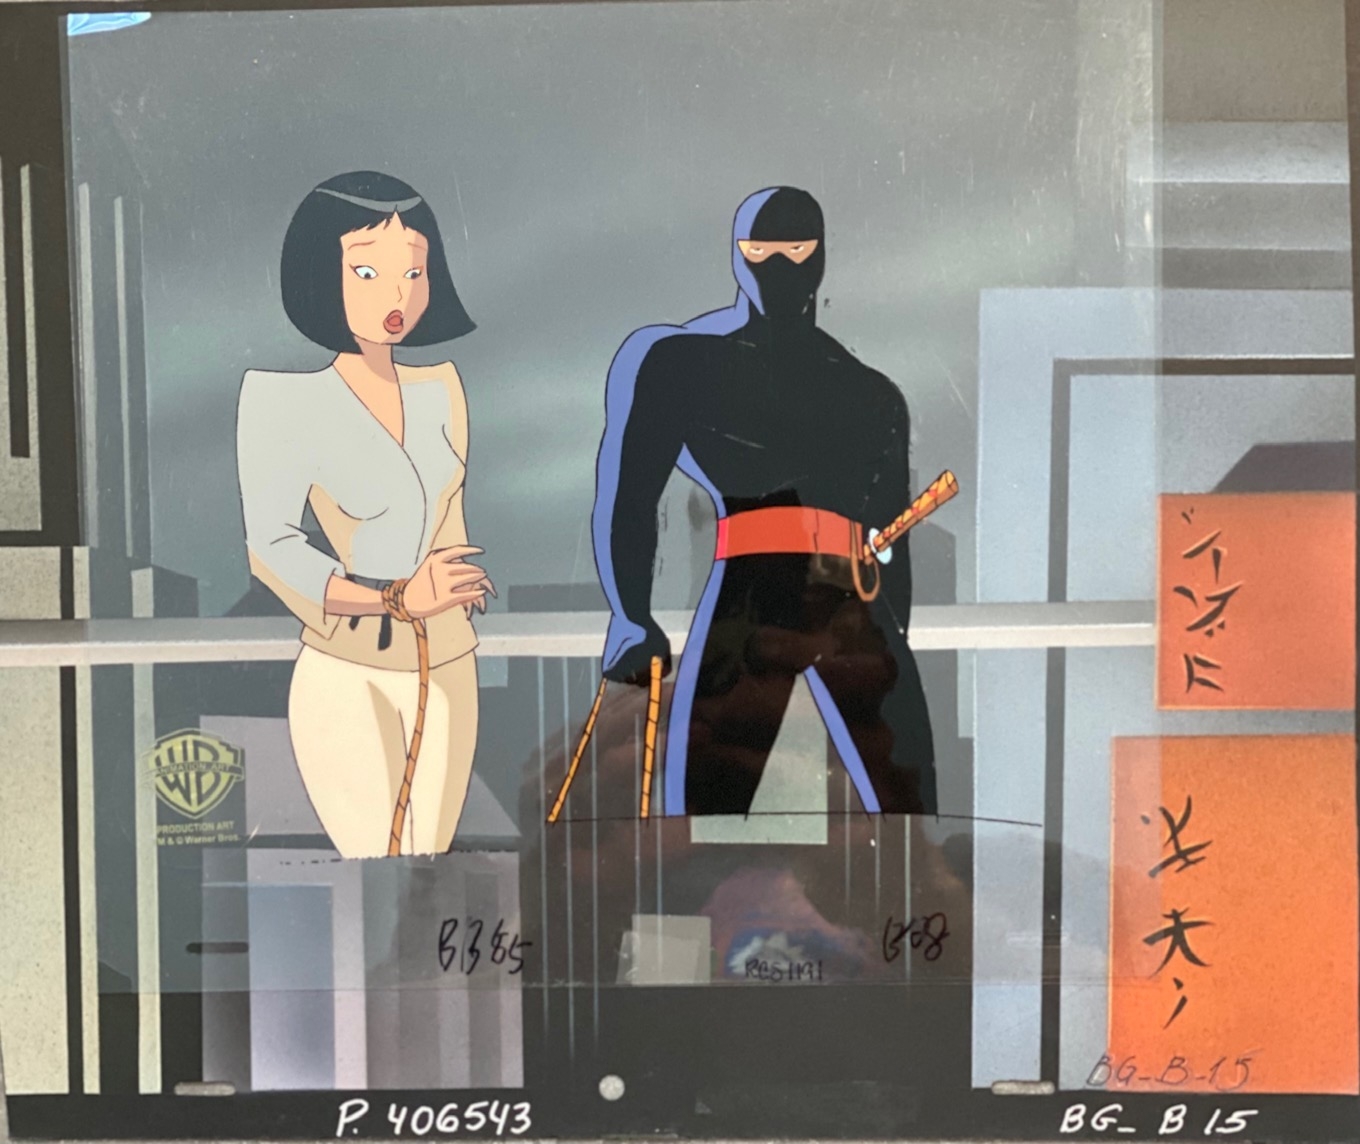 Batman: The Animated Series Production Cel, “Day of the Samurai”, in  Michael “Chad” Cloe's Batman: The Animated Series (BTAS) Animation Art  Comic Art Gallery Room